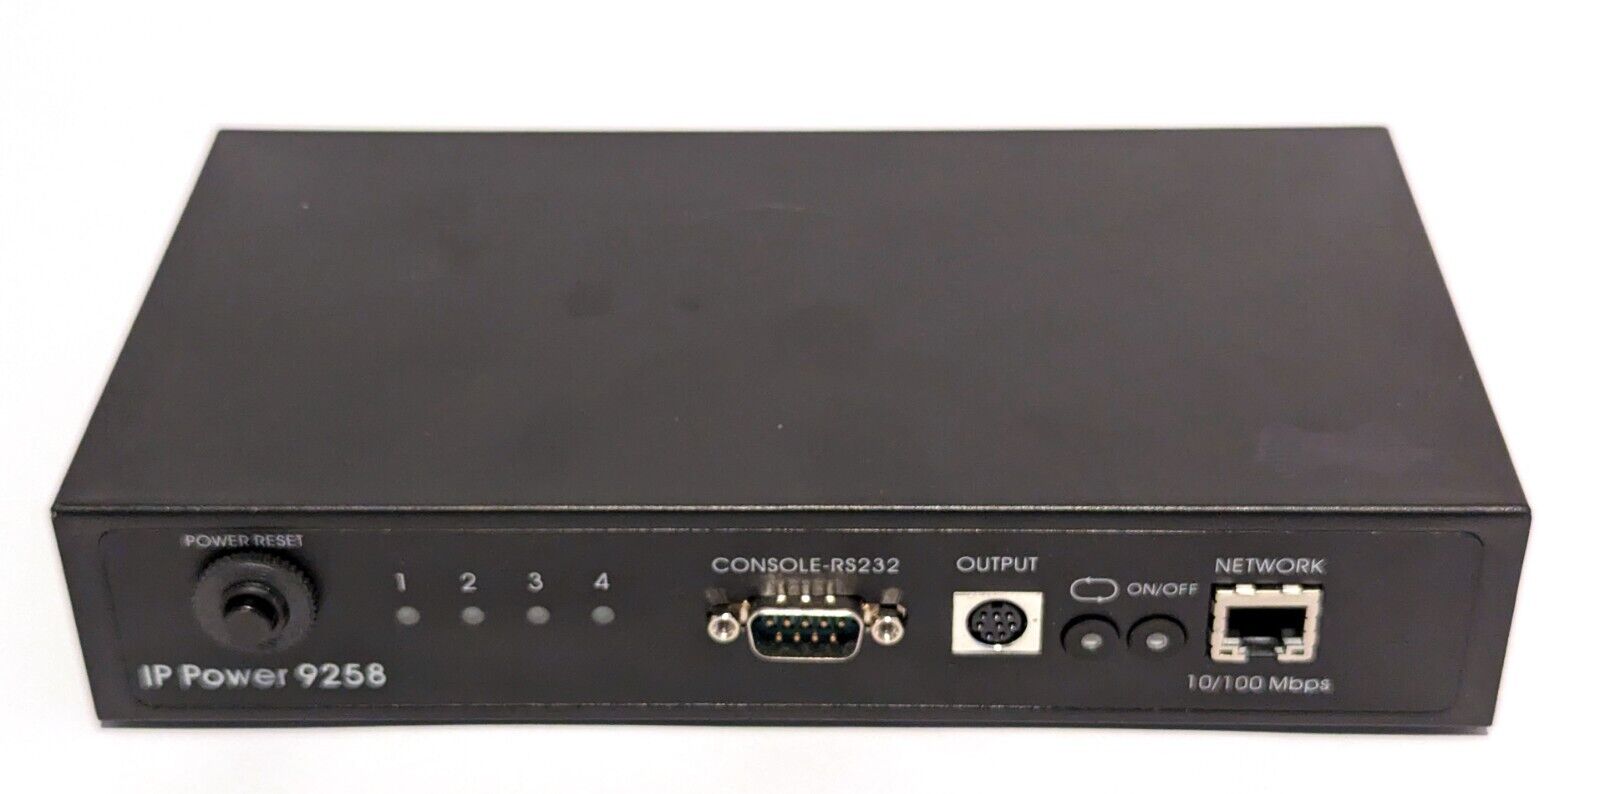 Aviosys IP 9258 T 4 Port Web Power Network Switch Controller Distribution Unit